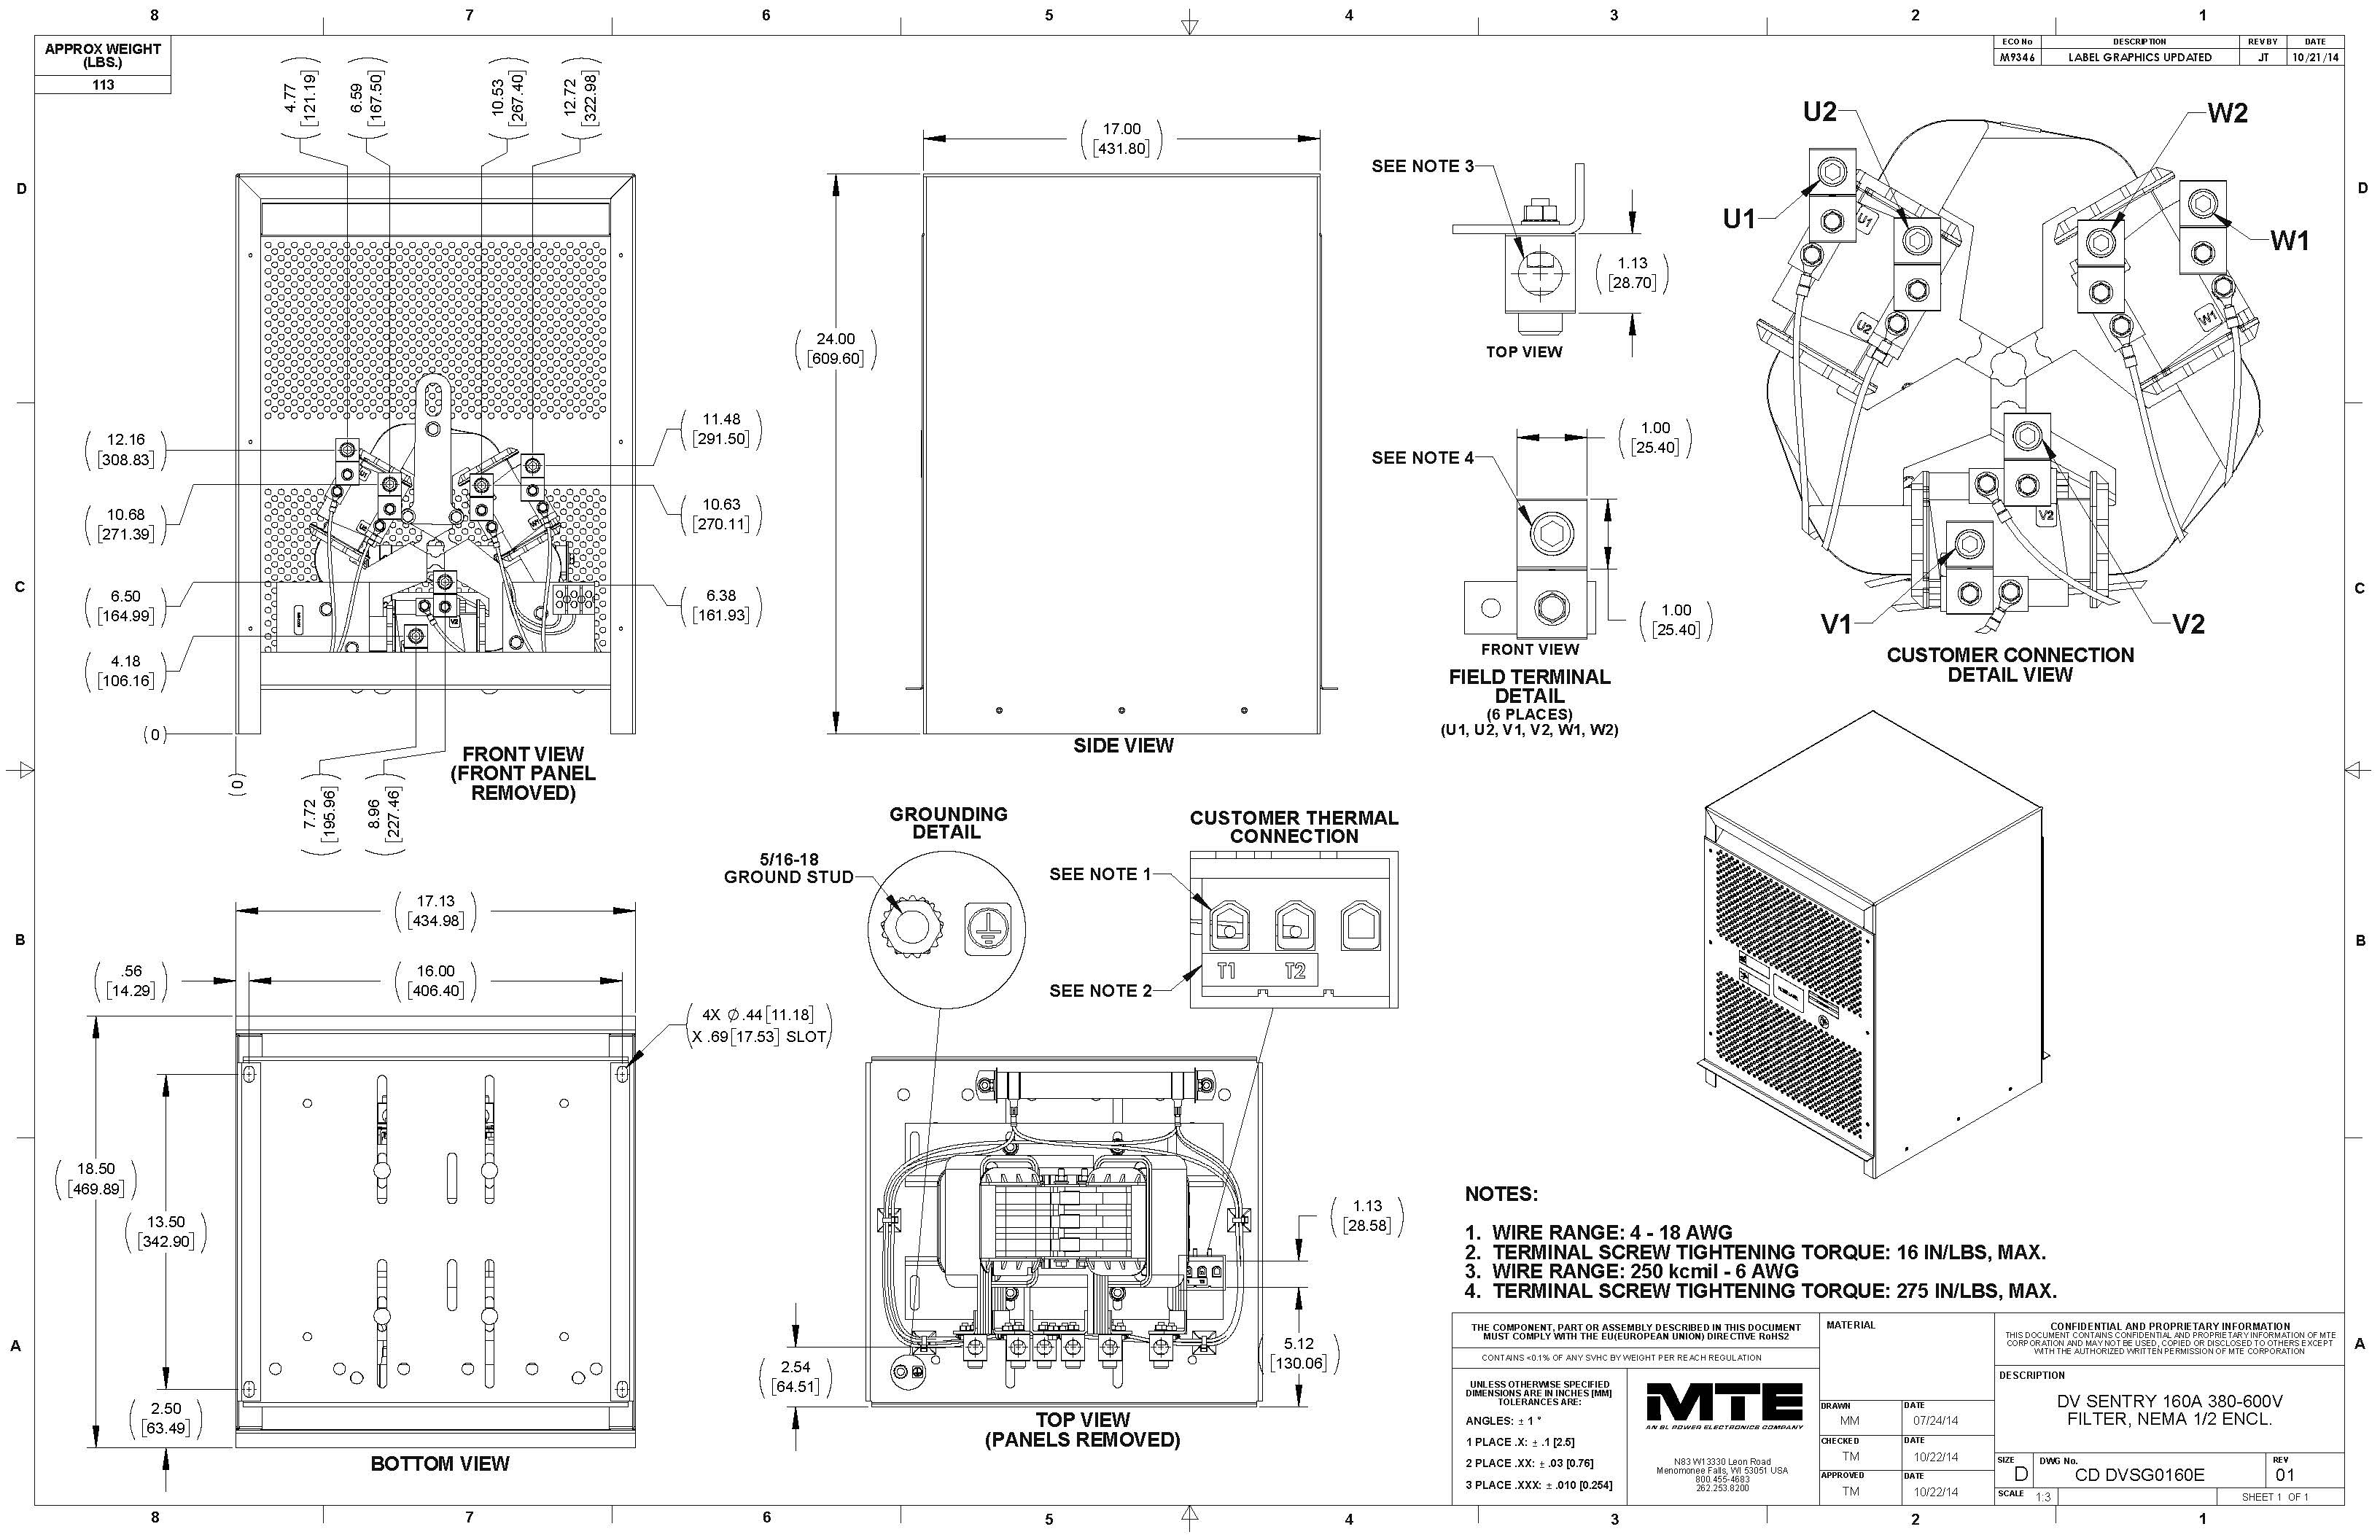 Image of an MTE dV Sentry filter DVSG0160E